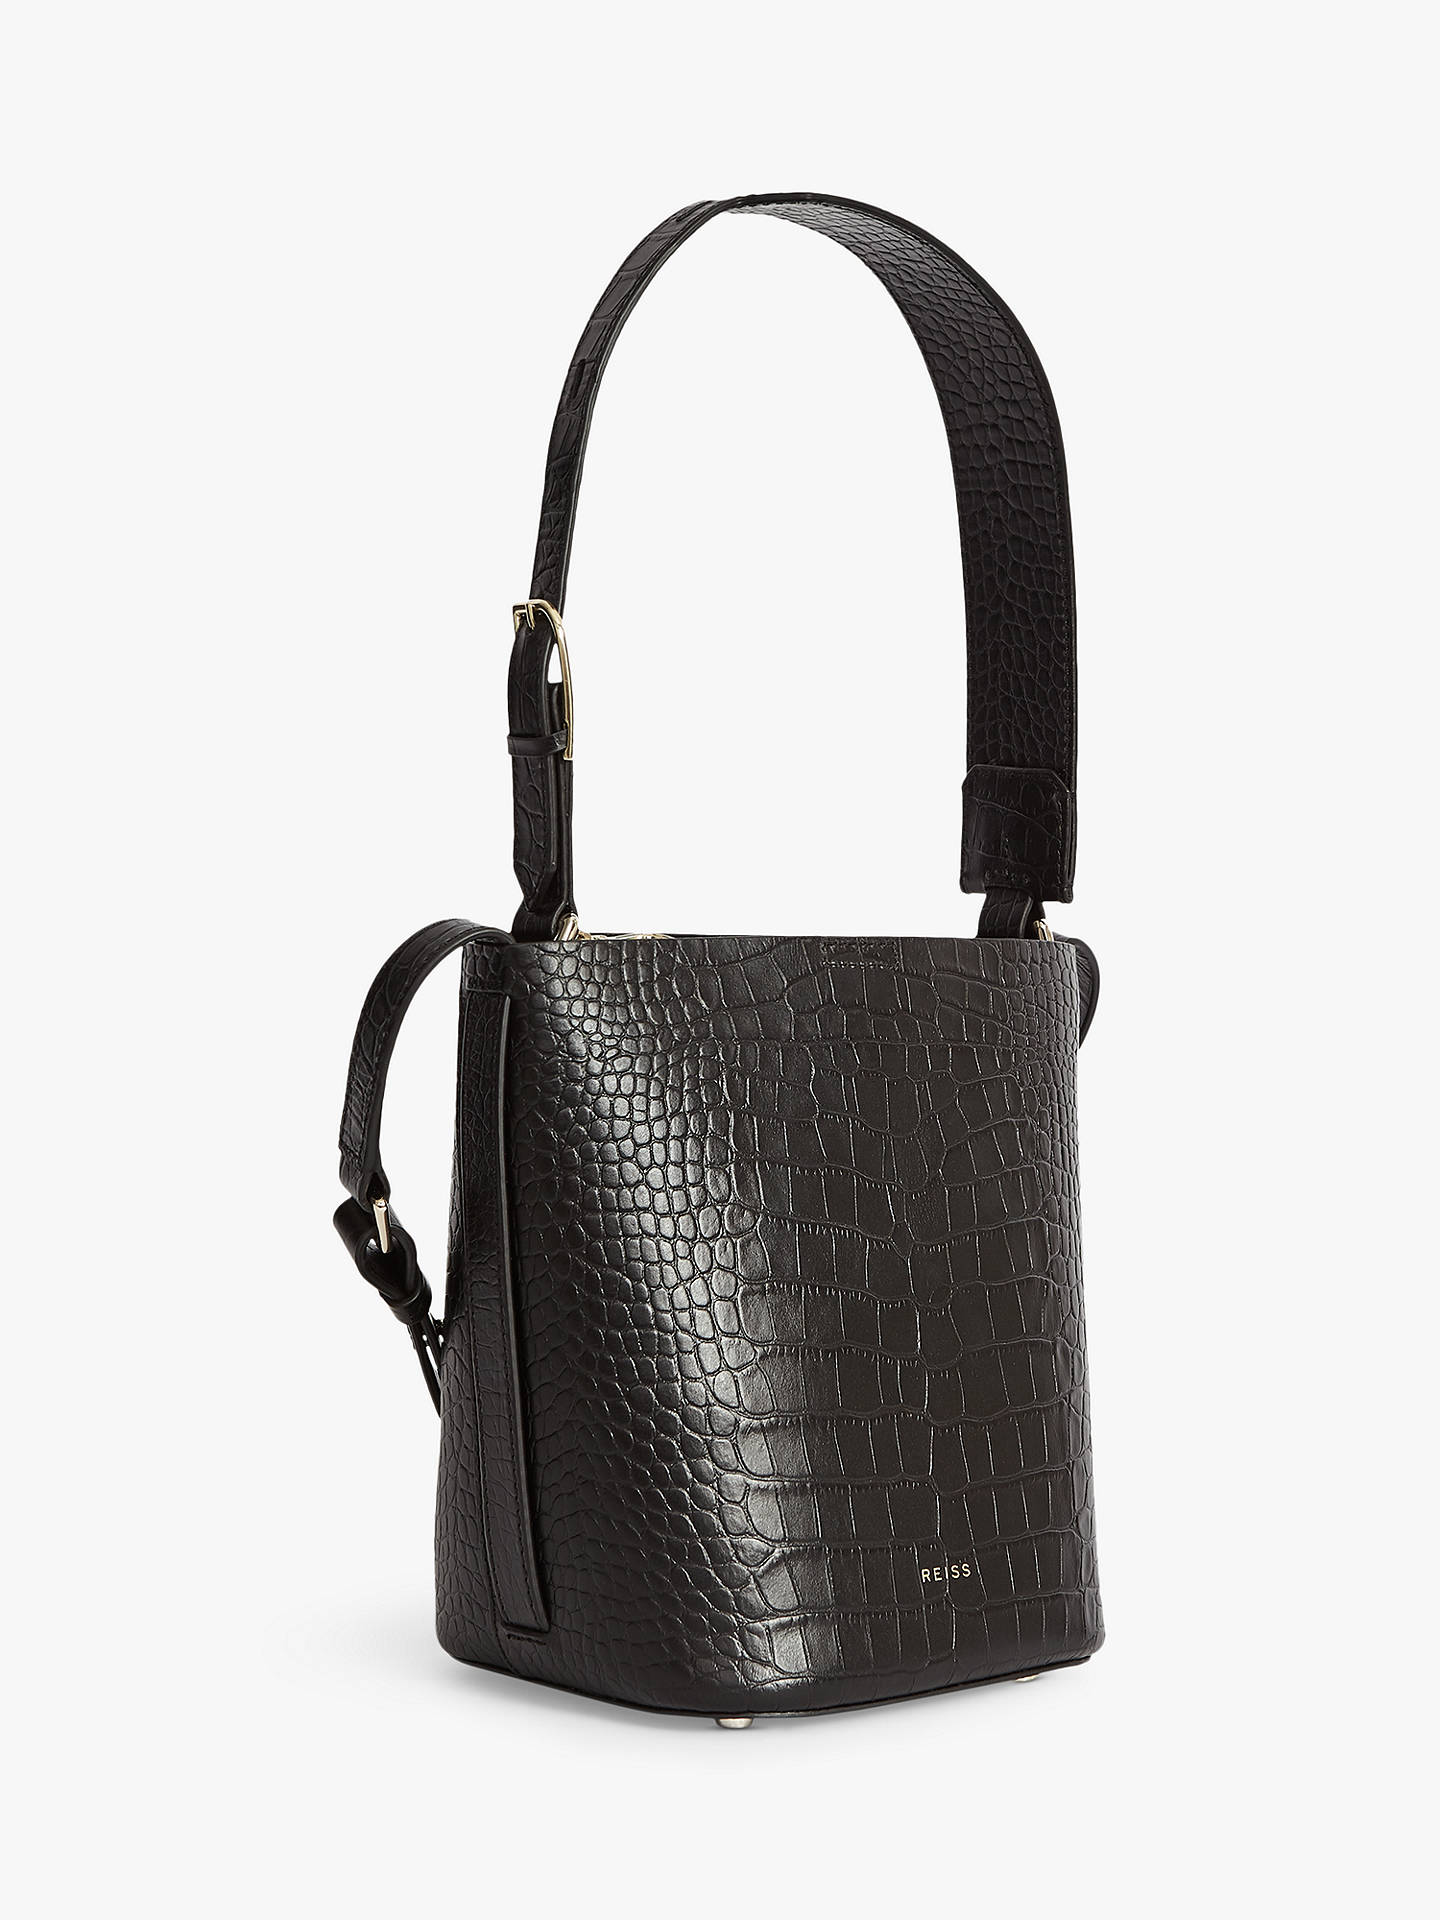 Reiss Hudson Mini Leather Bucket Bag at John Lewis & Partners